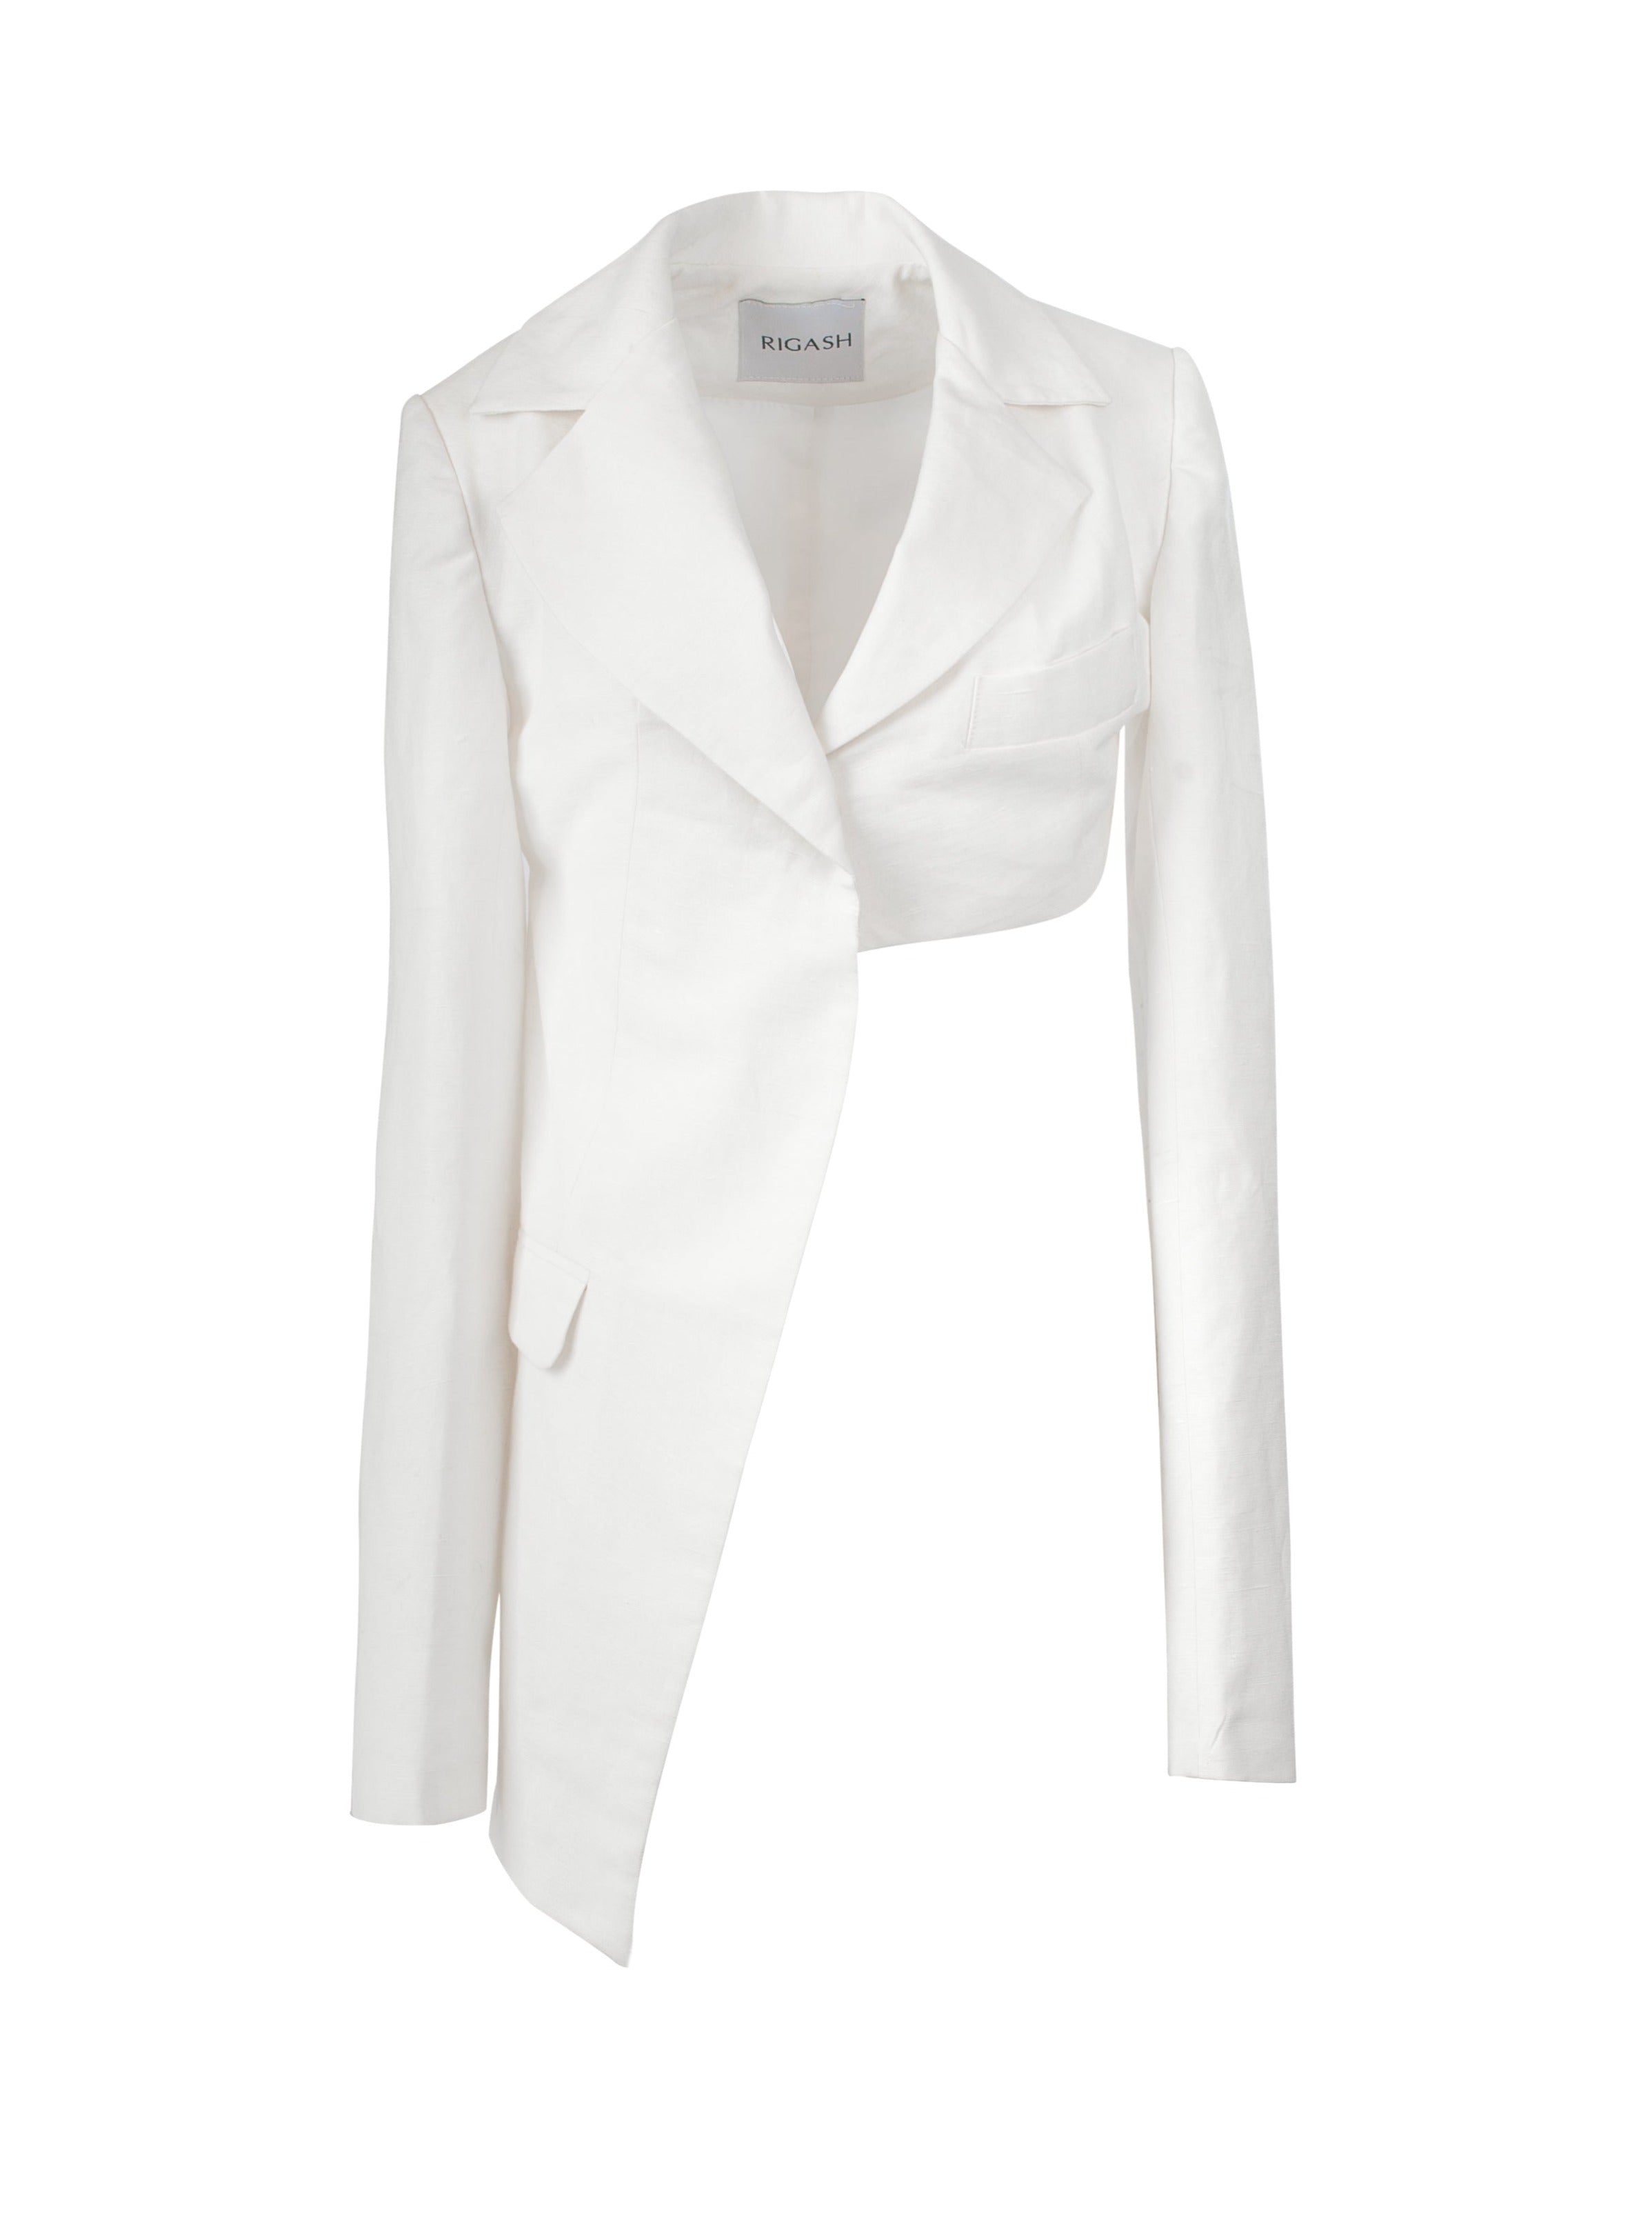 Asymmetrical white linen blazer with oversized shoulders. 